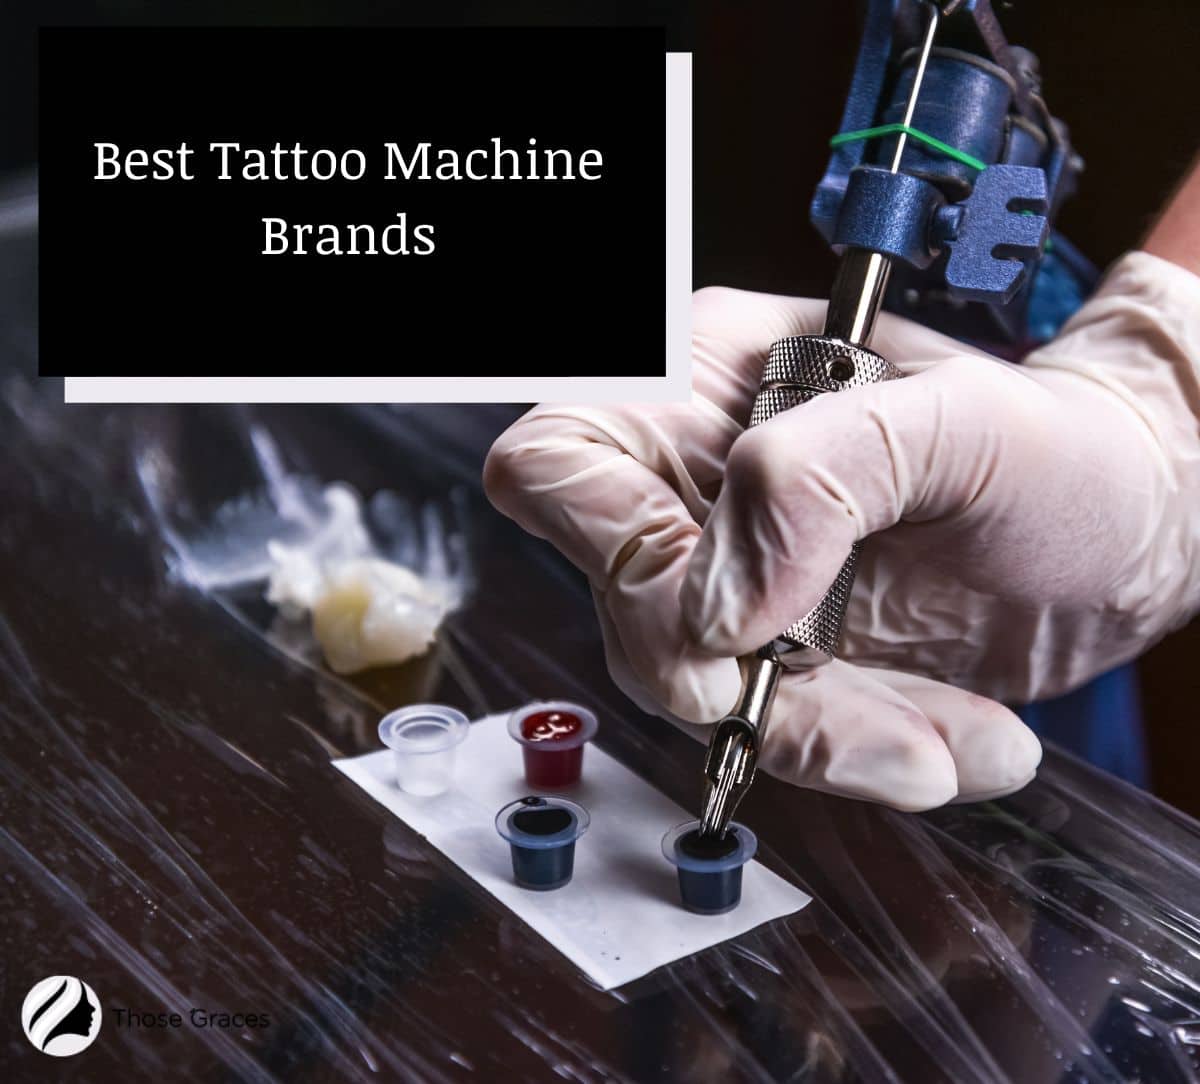 tattoo artist using some of the Best Tattoo Machine Brands